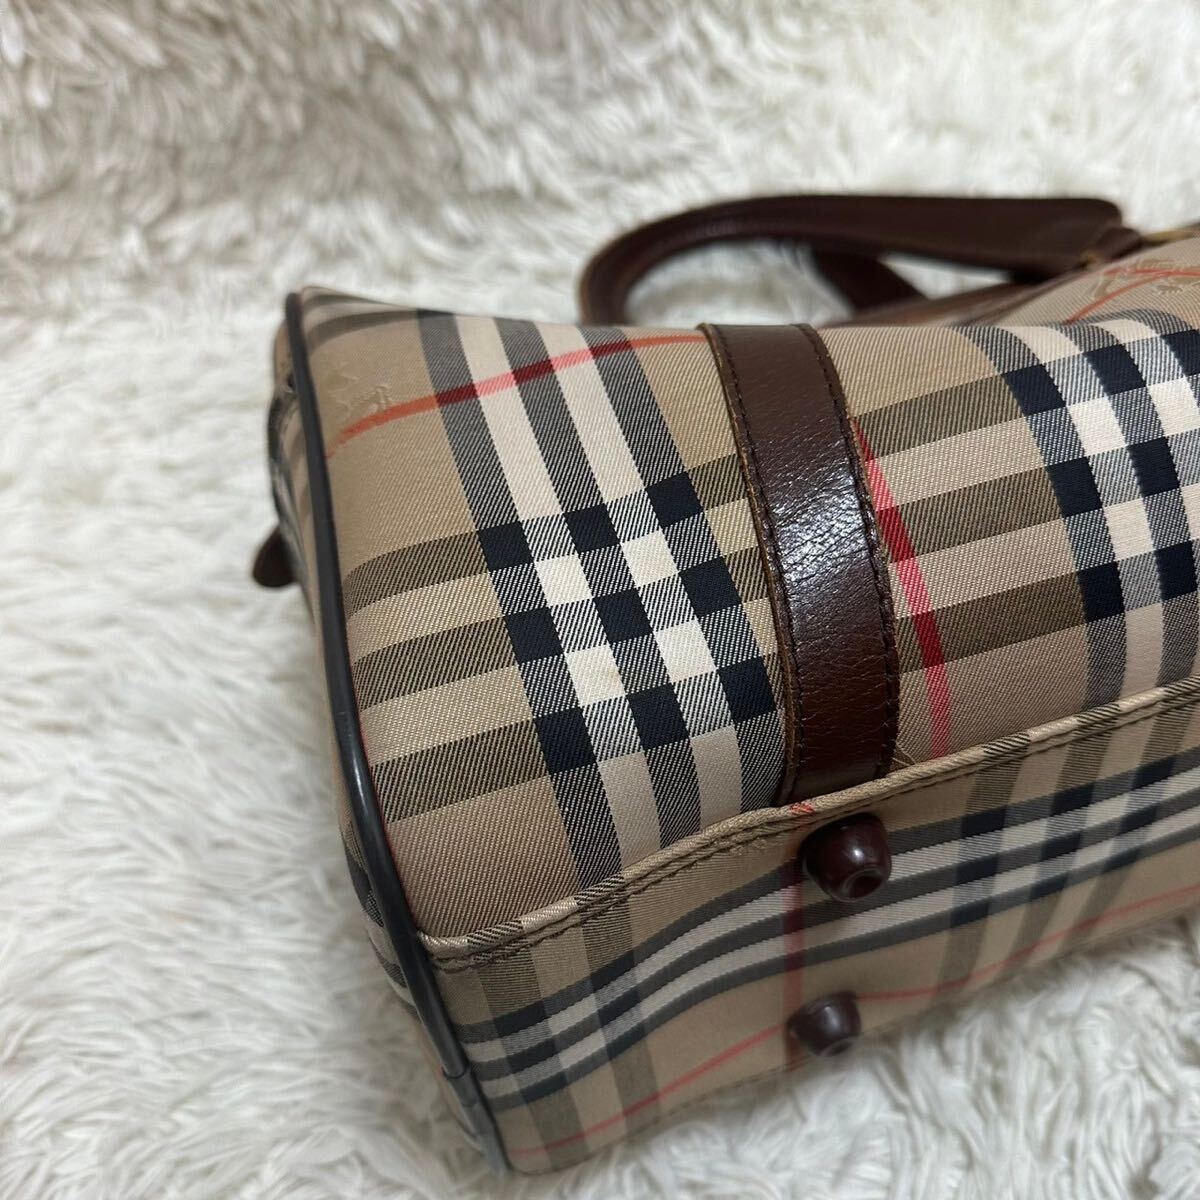  Burberry [ популярный дизайн ]Burberrys сумка "Boston bag" ручная сумочка noba проверка Shadow шланг кожа BURBERRY Burberry z